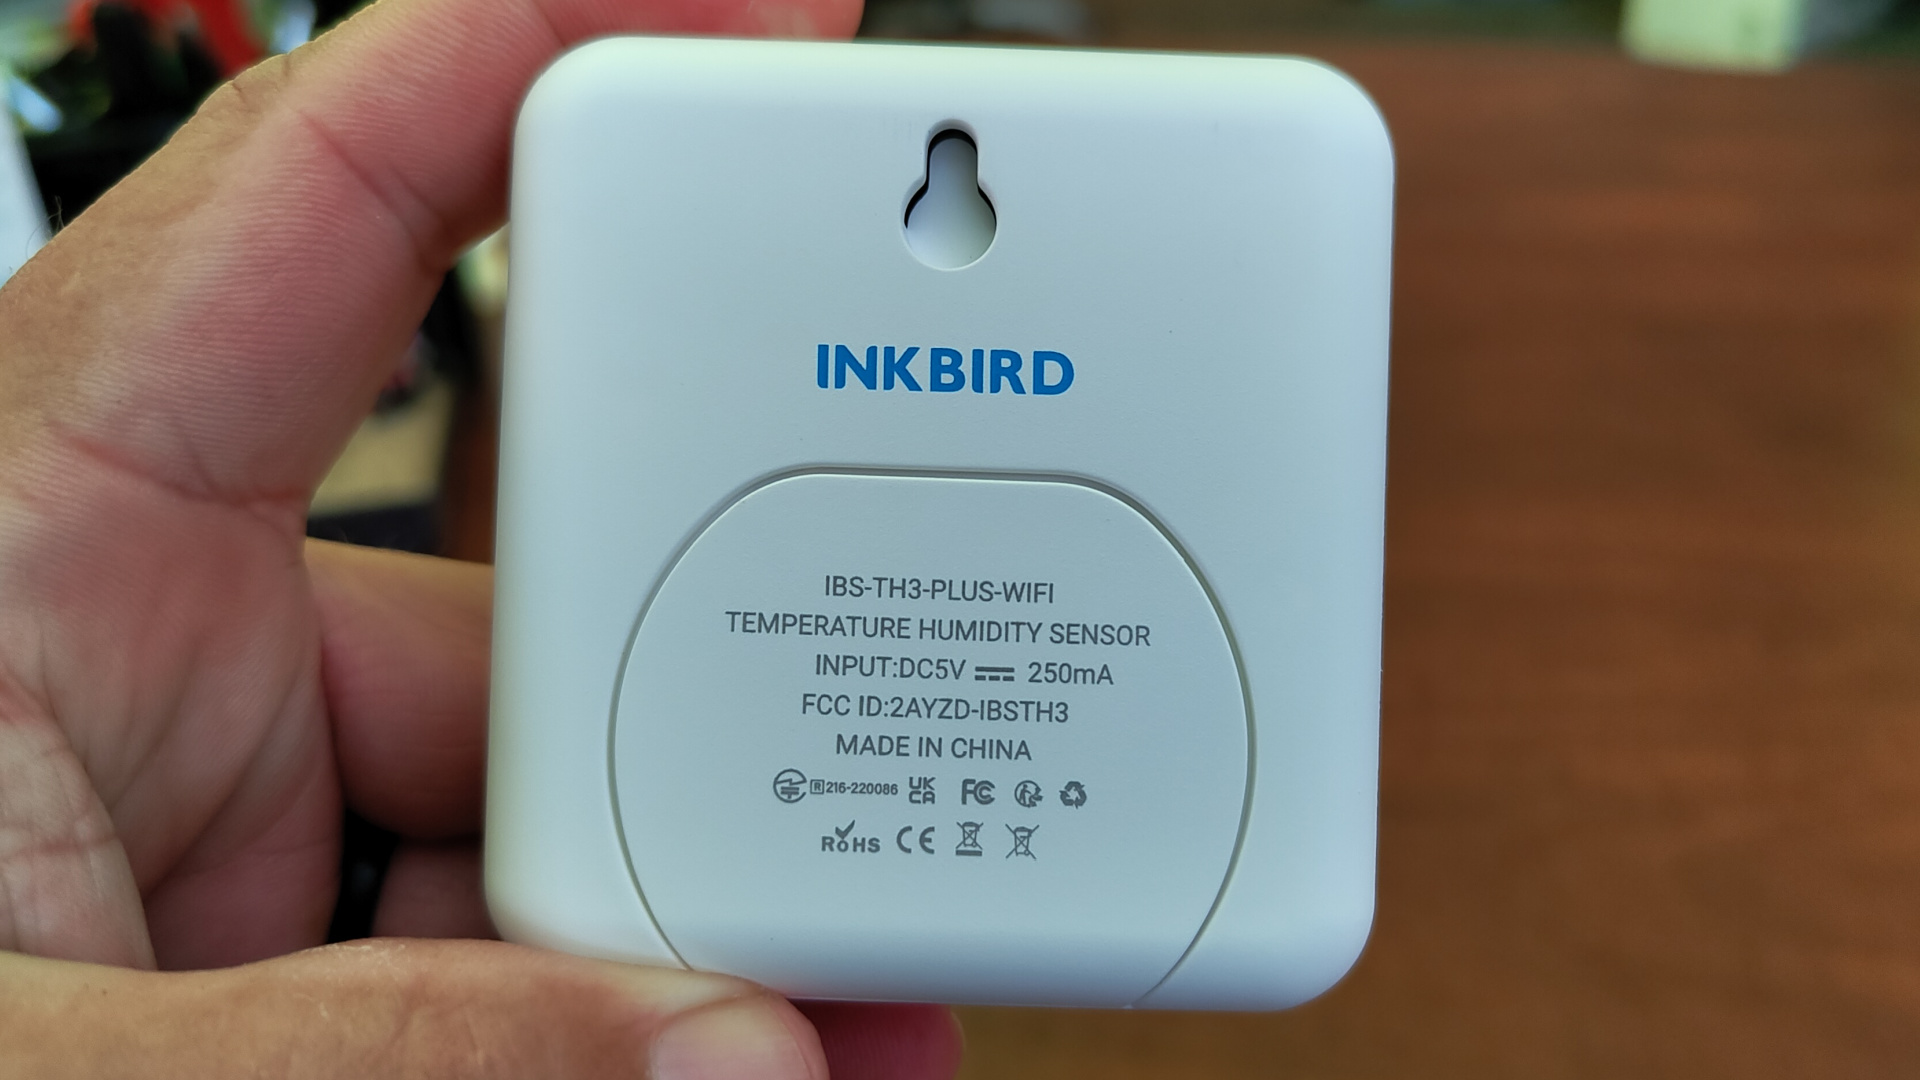 INKBIRD WiFi Thermometer Hygrometer Smart Temperature Humidity Sensor  IBS-TH3